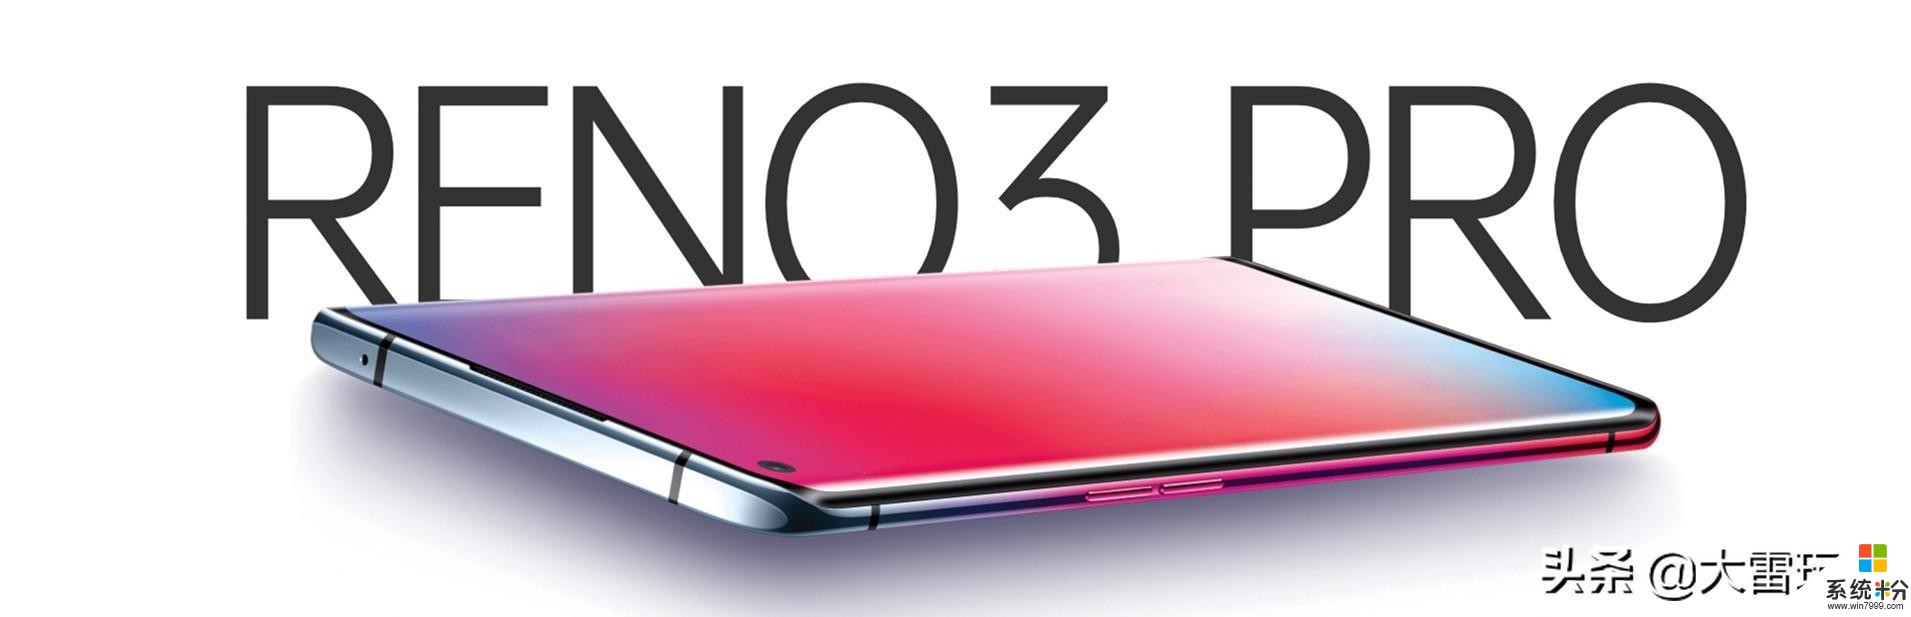 「Reno3系列评测」5G超薄视频手机OPPOReno3Pro上手浅评(1)